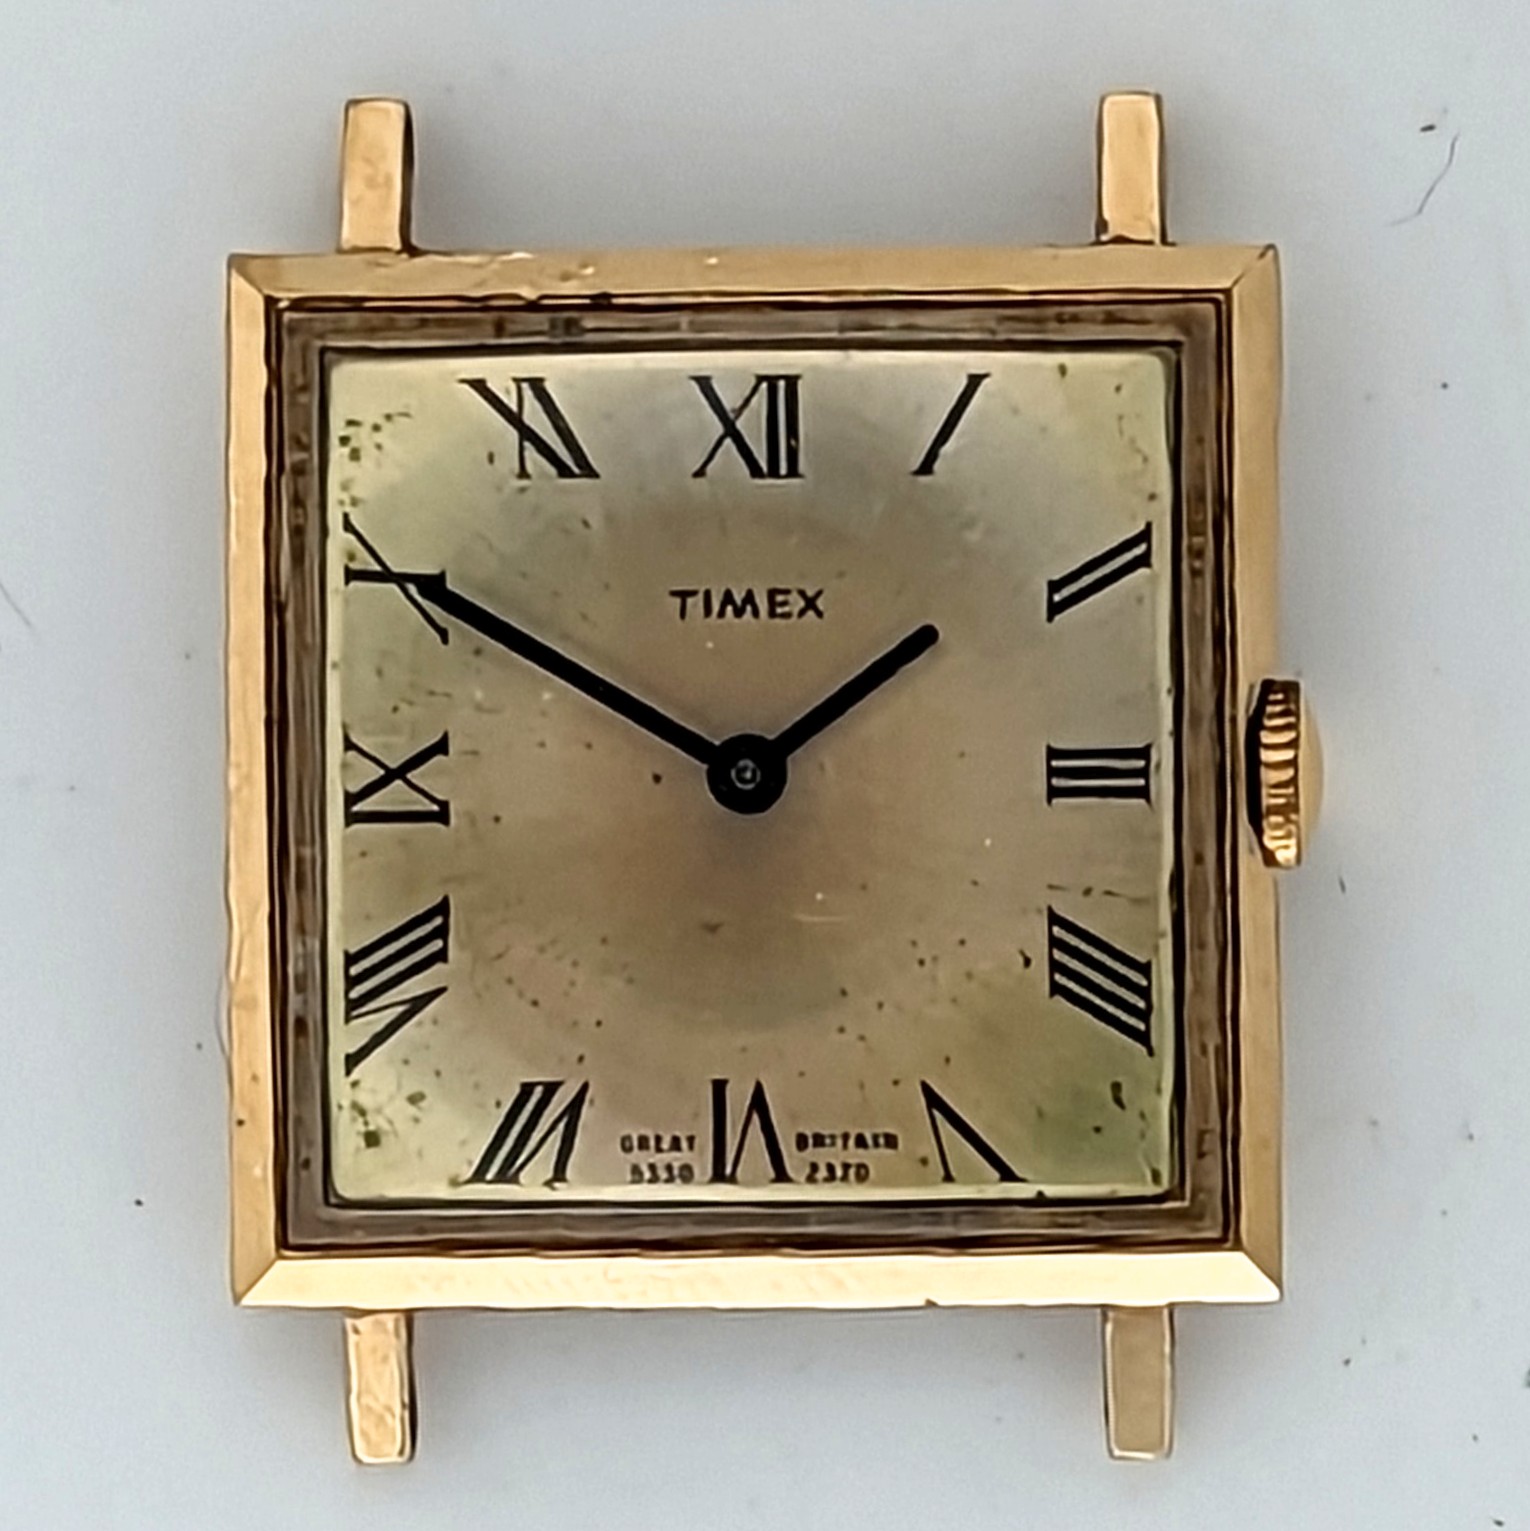 Timex Super Thin 5330 2370 [1970]